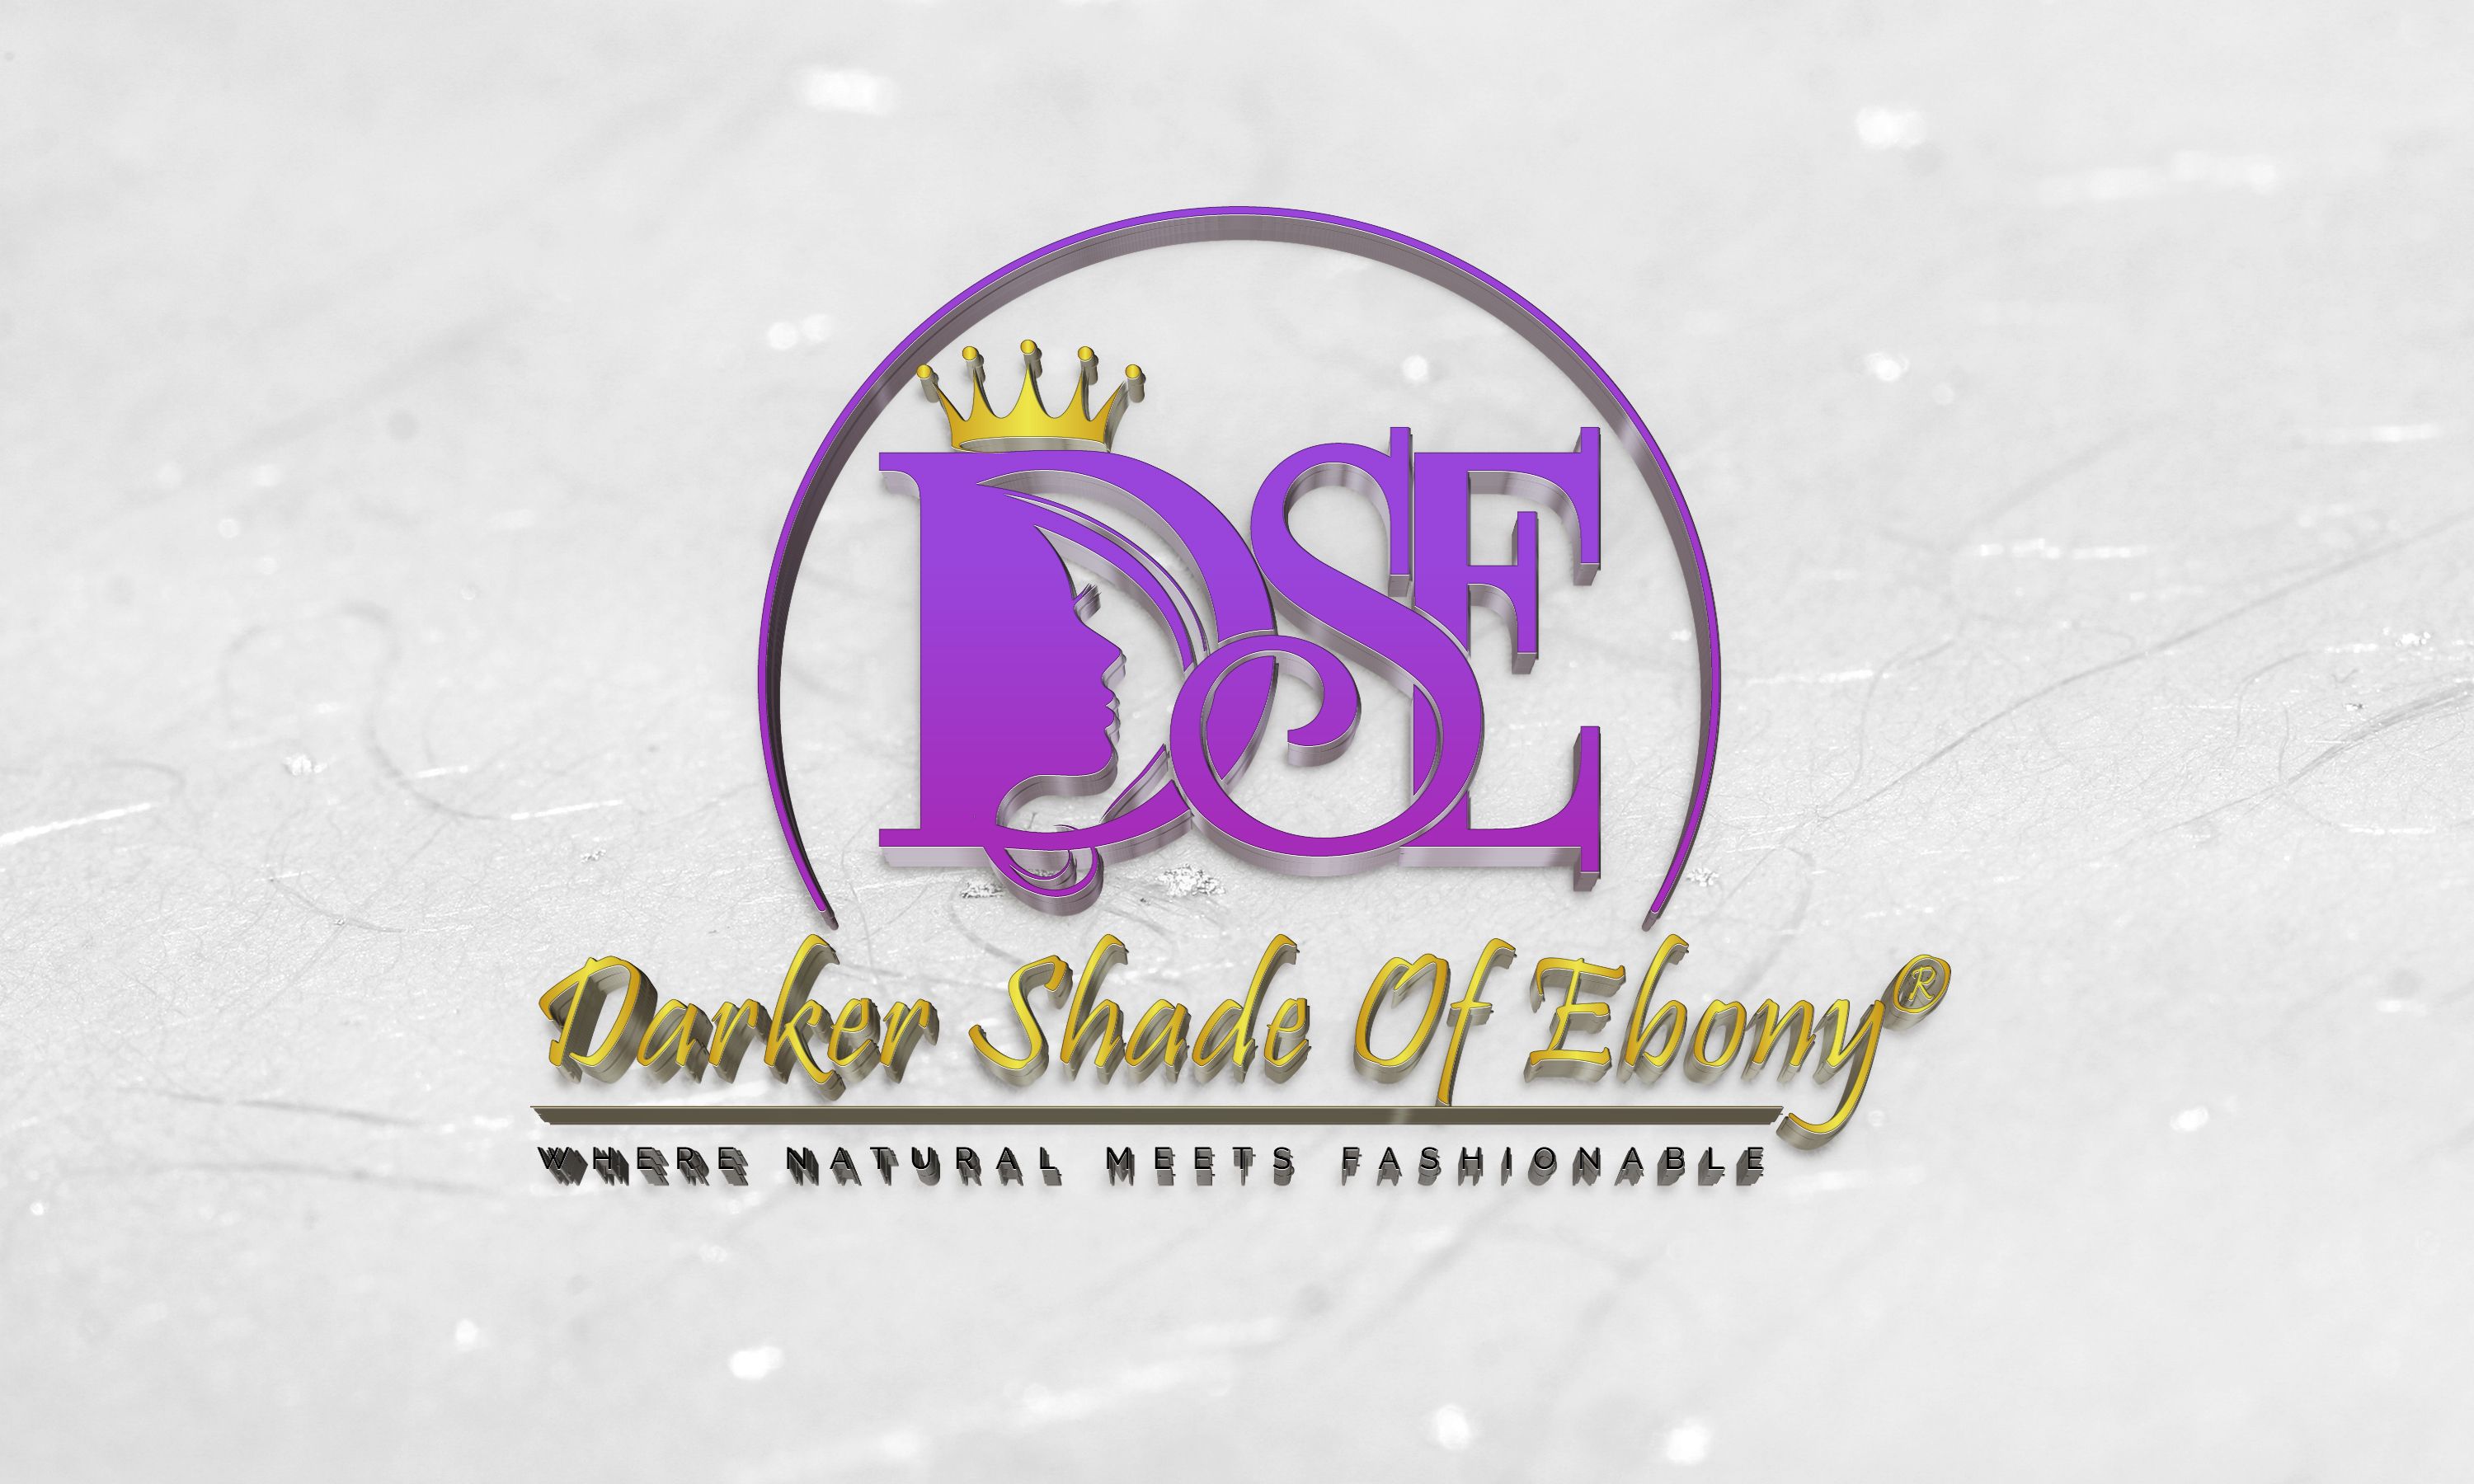 Darker Shade of Ebony, Inc